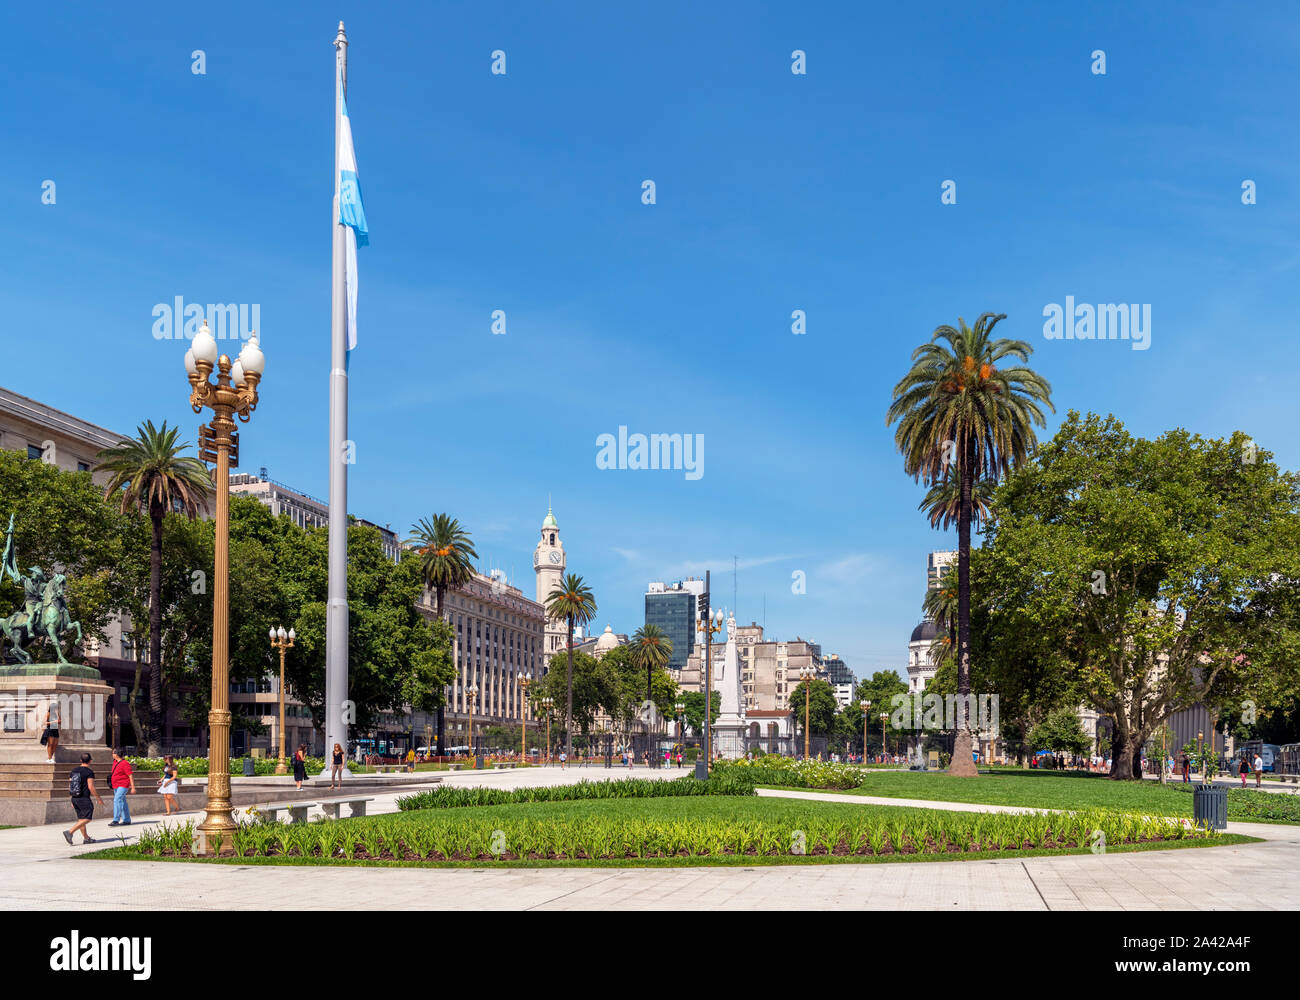 Plaza de Mayo en regardant vers la Pirámide de Mayo, Buenos Aires, Argentine, Amérique du Sud Banque D'Images